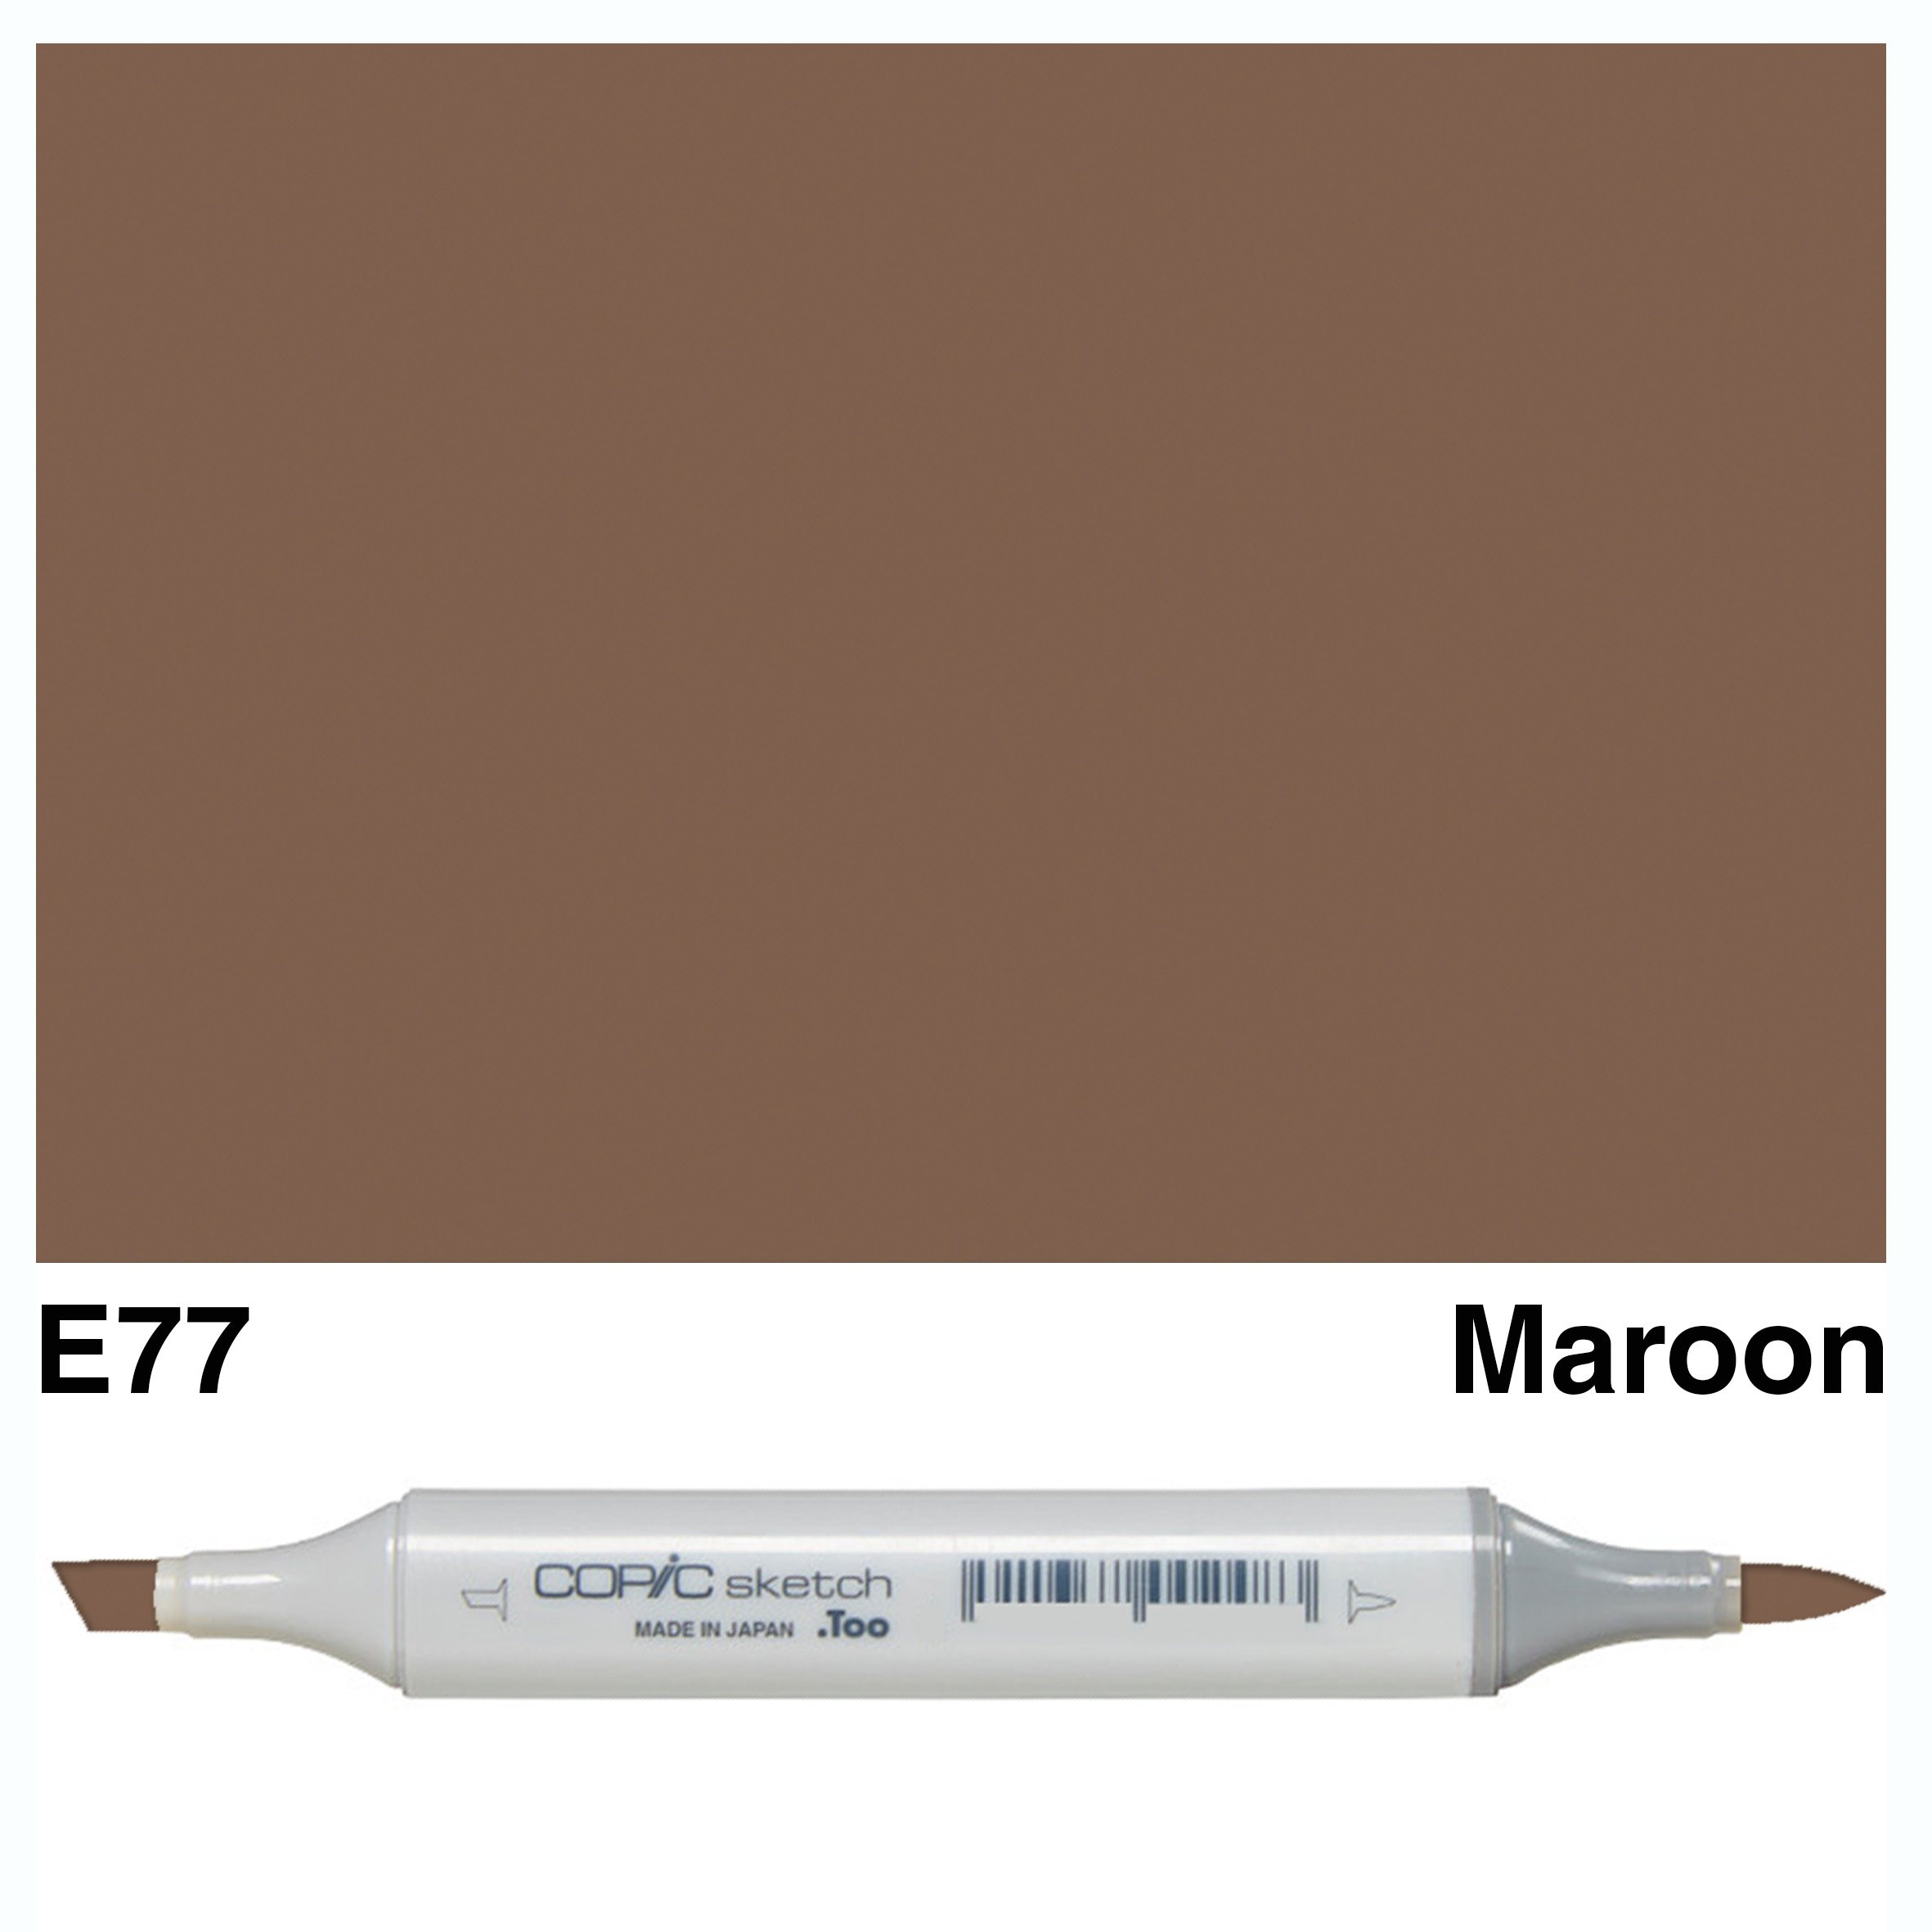 E77-Maroon　SeniorArt　Copic　$10.28　Sketch　[135178]